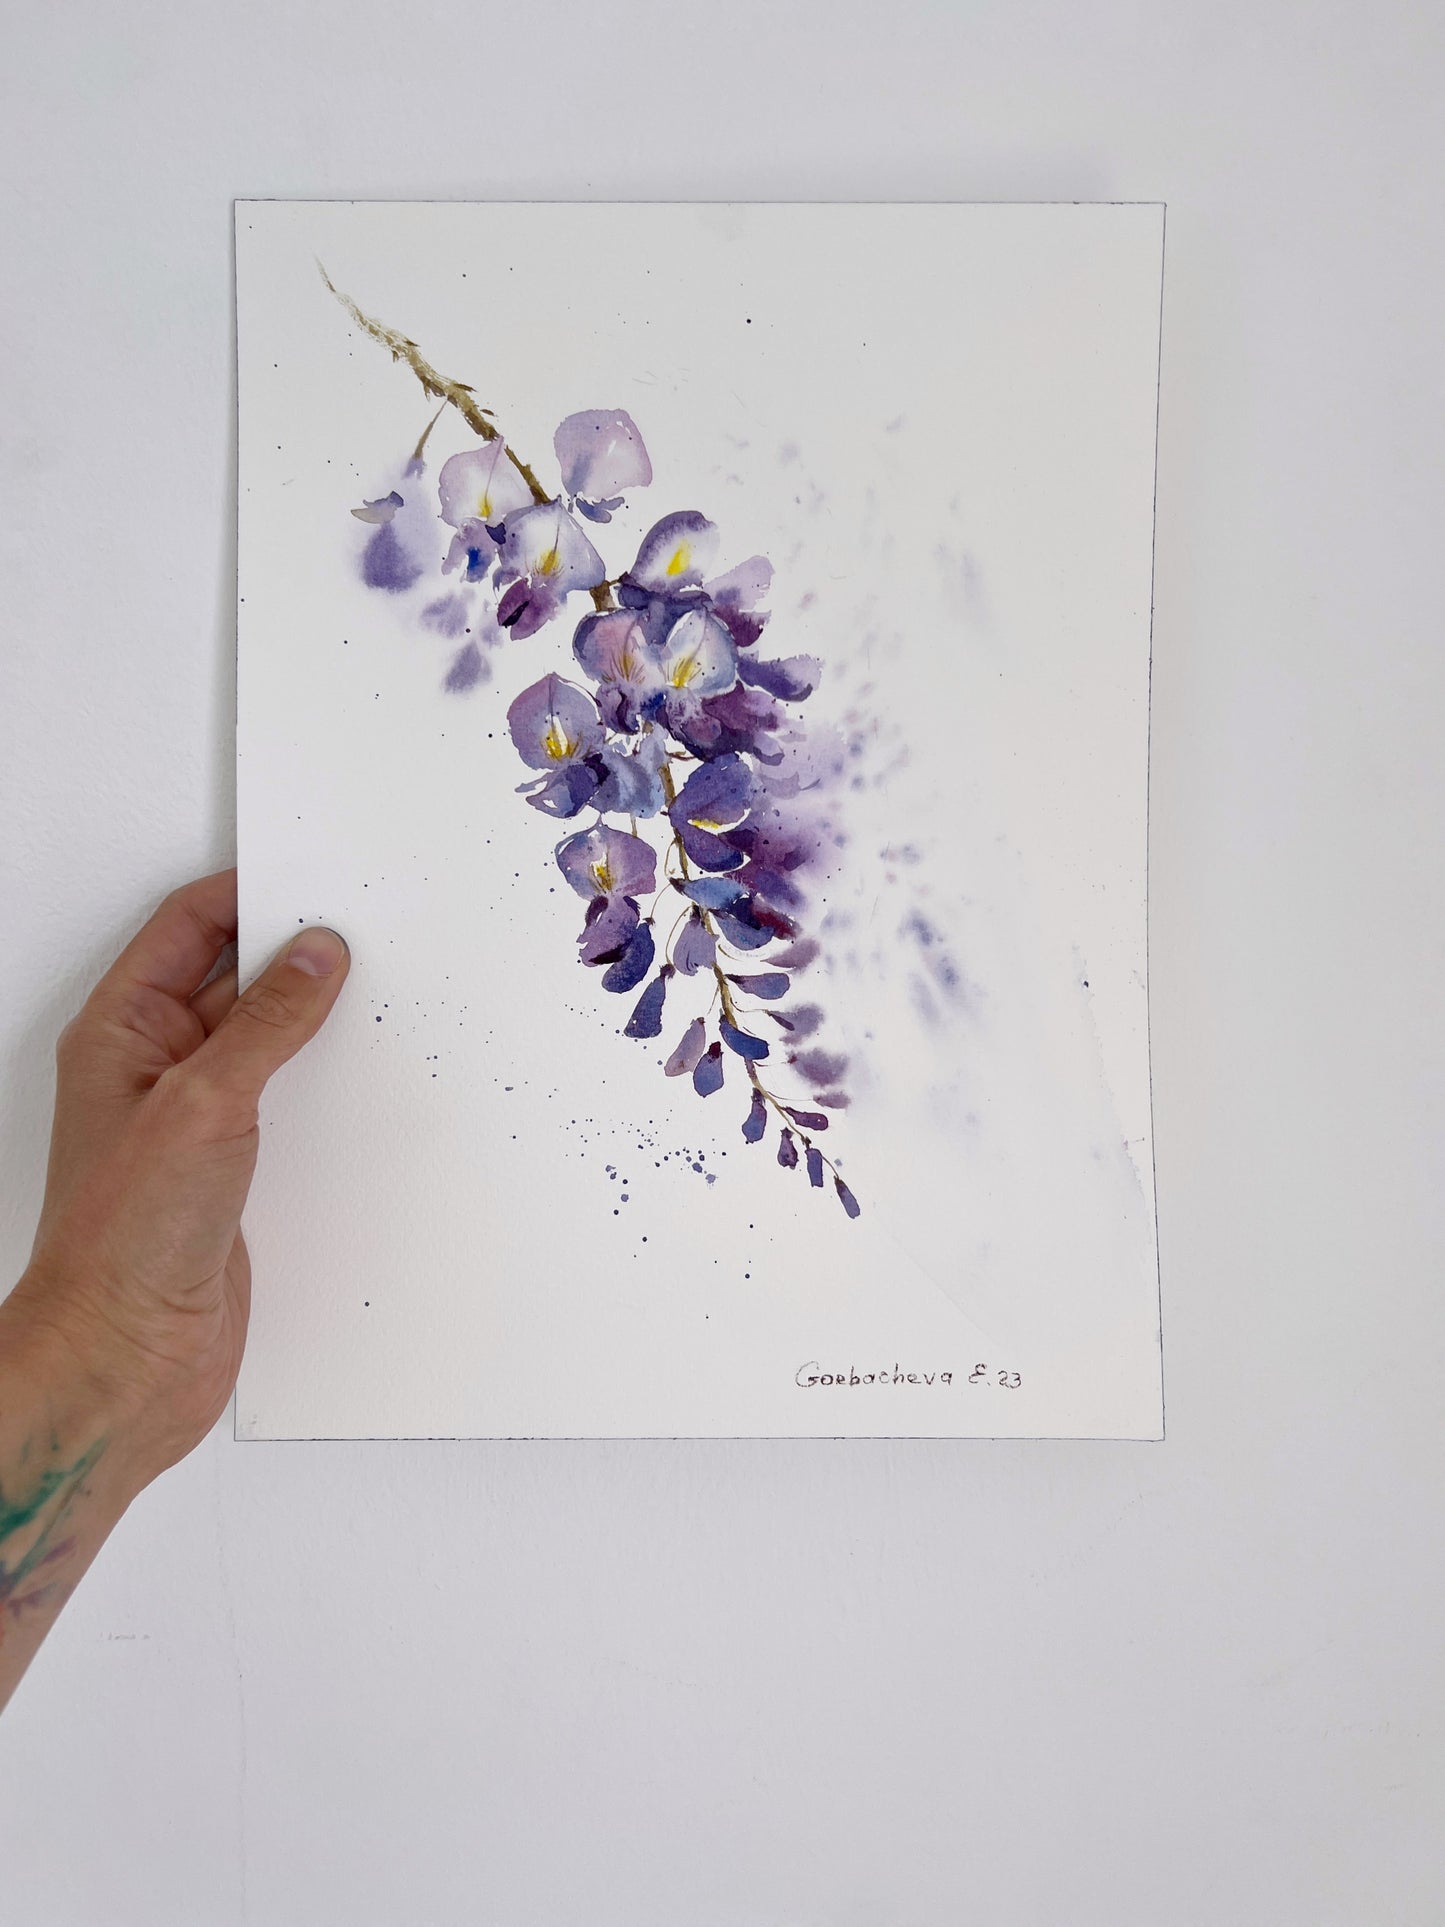 Watercolor Wisteria Painting, Flower Original Wall Art, Purple flowers, Still Life, Gift For Mom Ideas, Flora Artwork